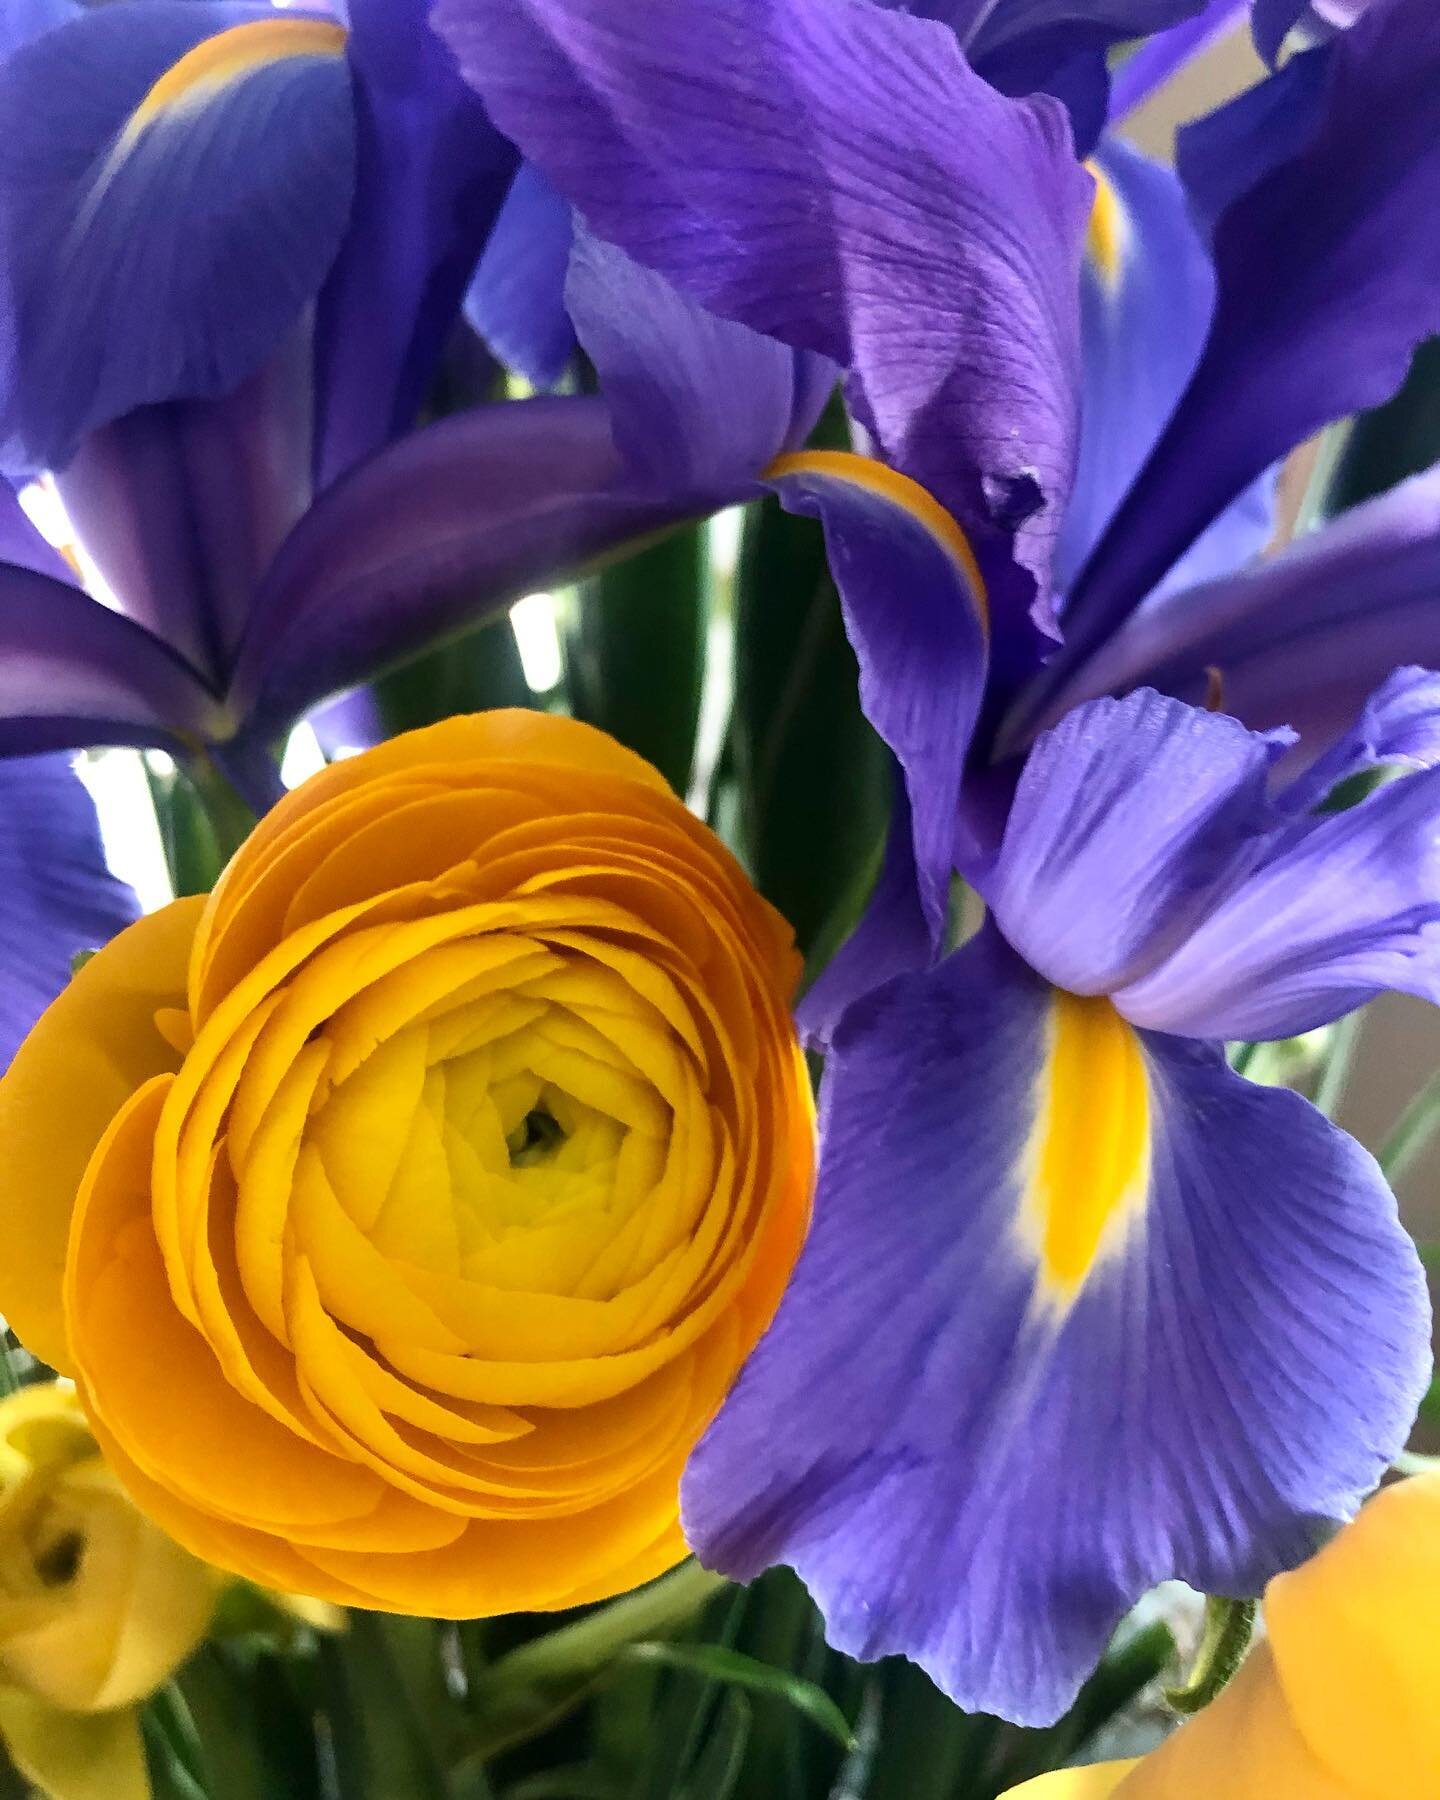 Flower power 🌼💜

*
#flower #purple #yellow #home #goodvibes #details #lifestyle #myshortstory #sillygirlsandra